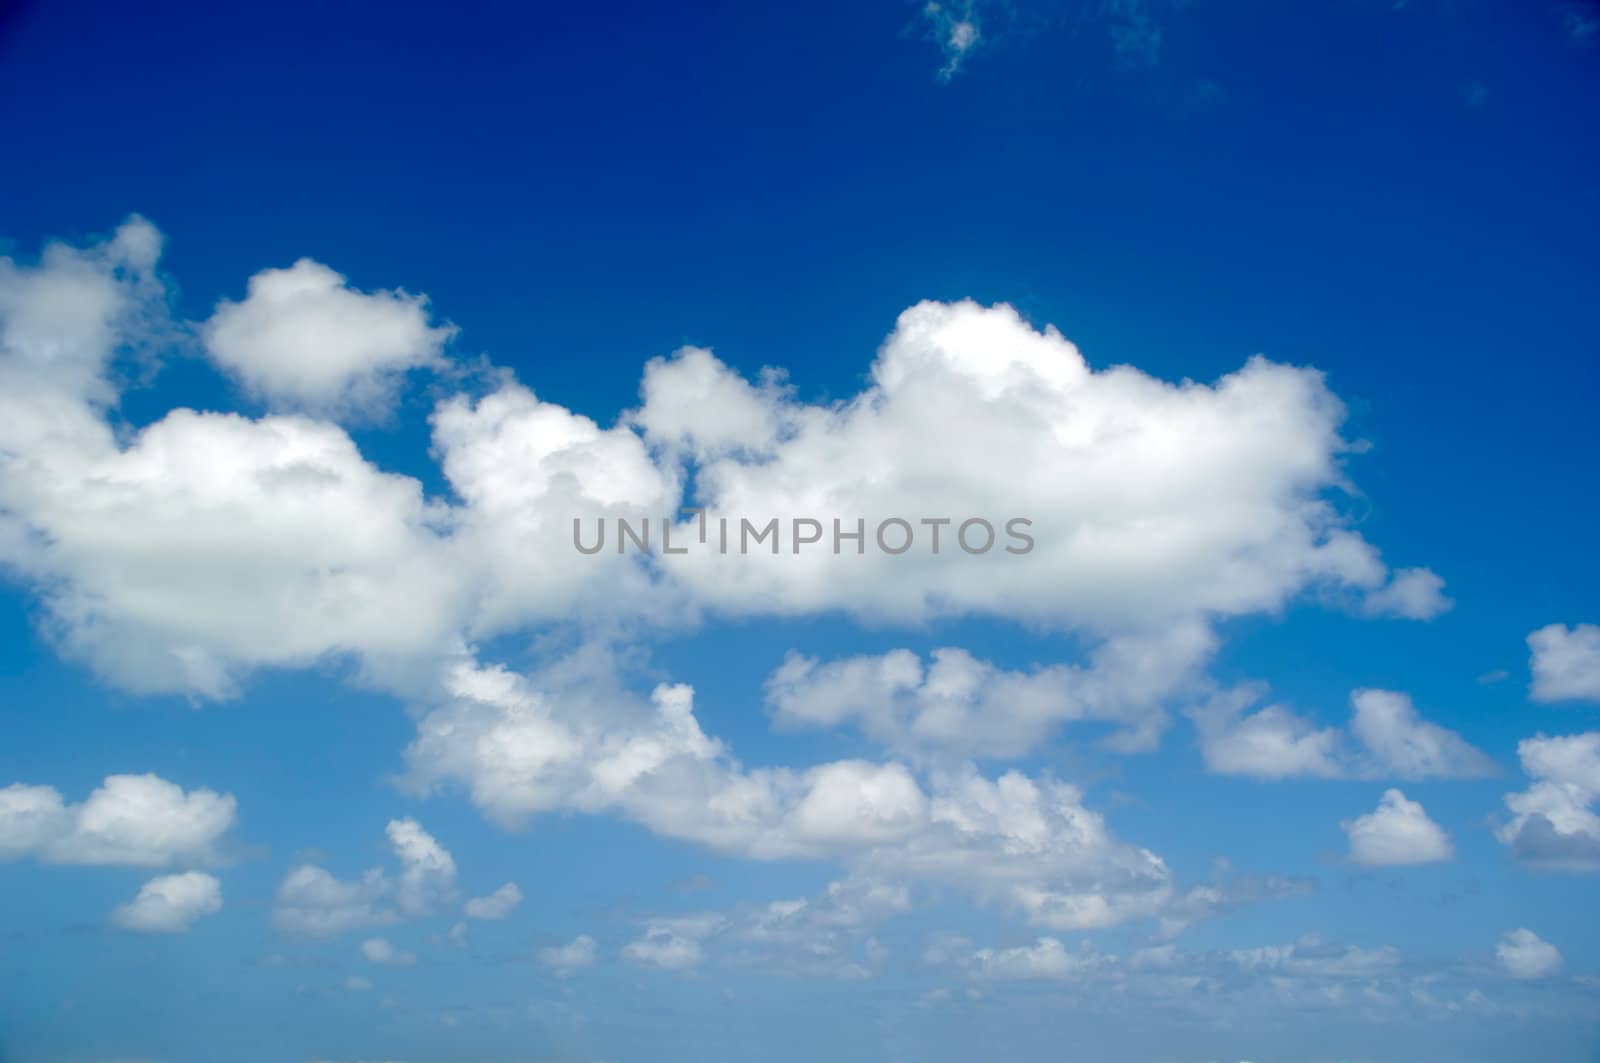 Cloudscape with white cumulus clouds and a blue sky.